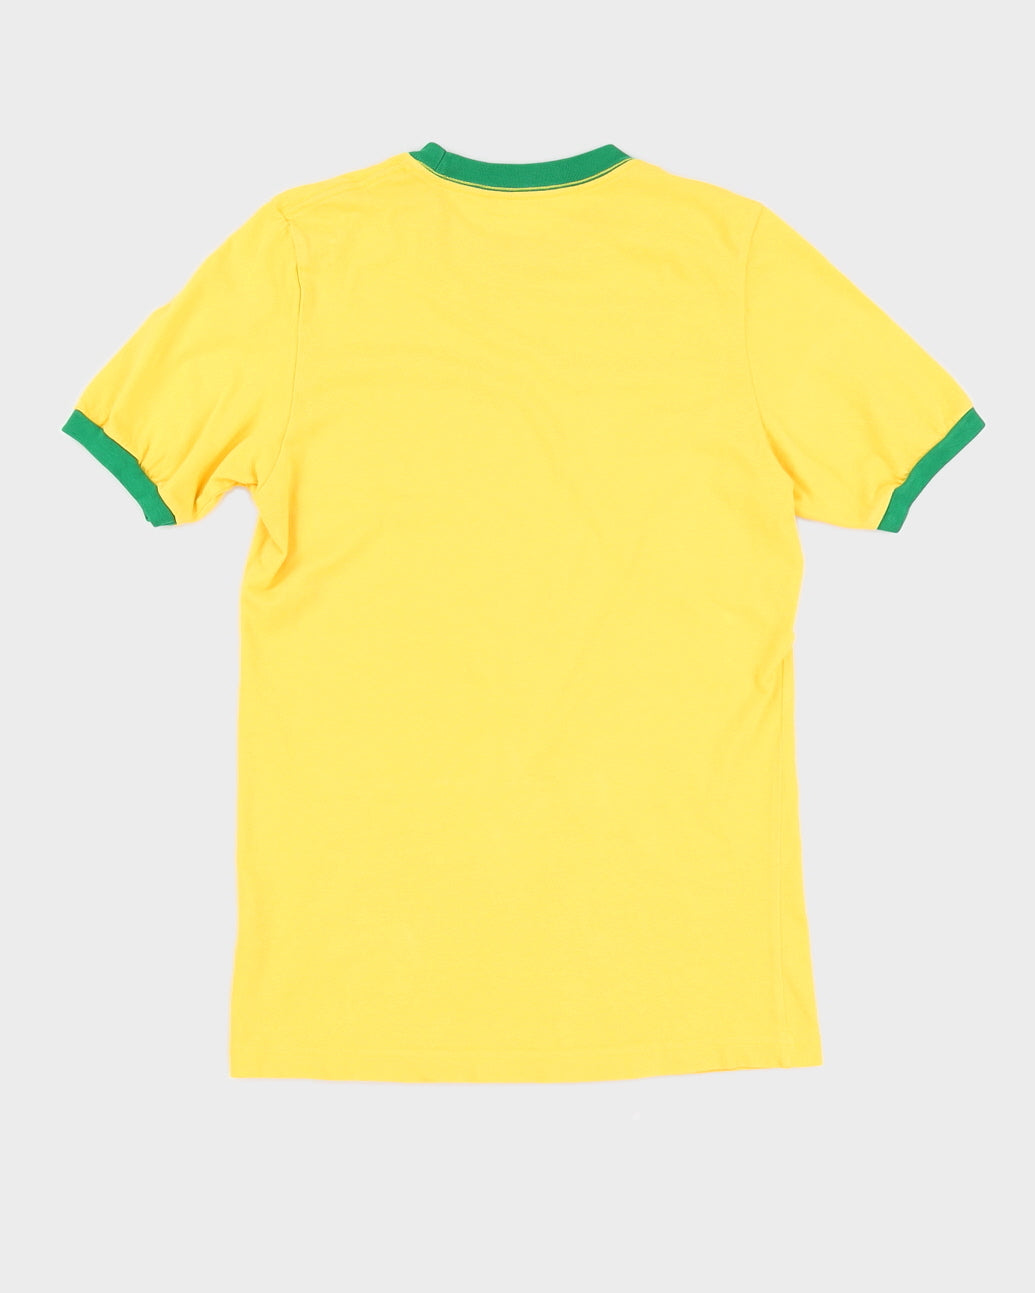 Nike x Brazilian Football Confederation T-Shirt - M